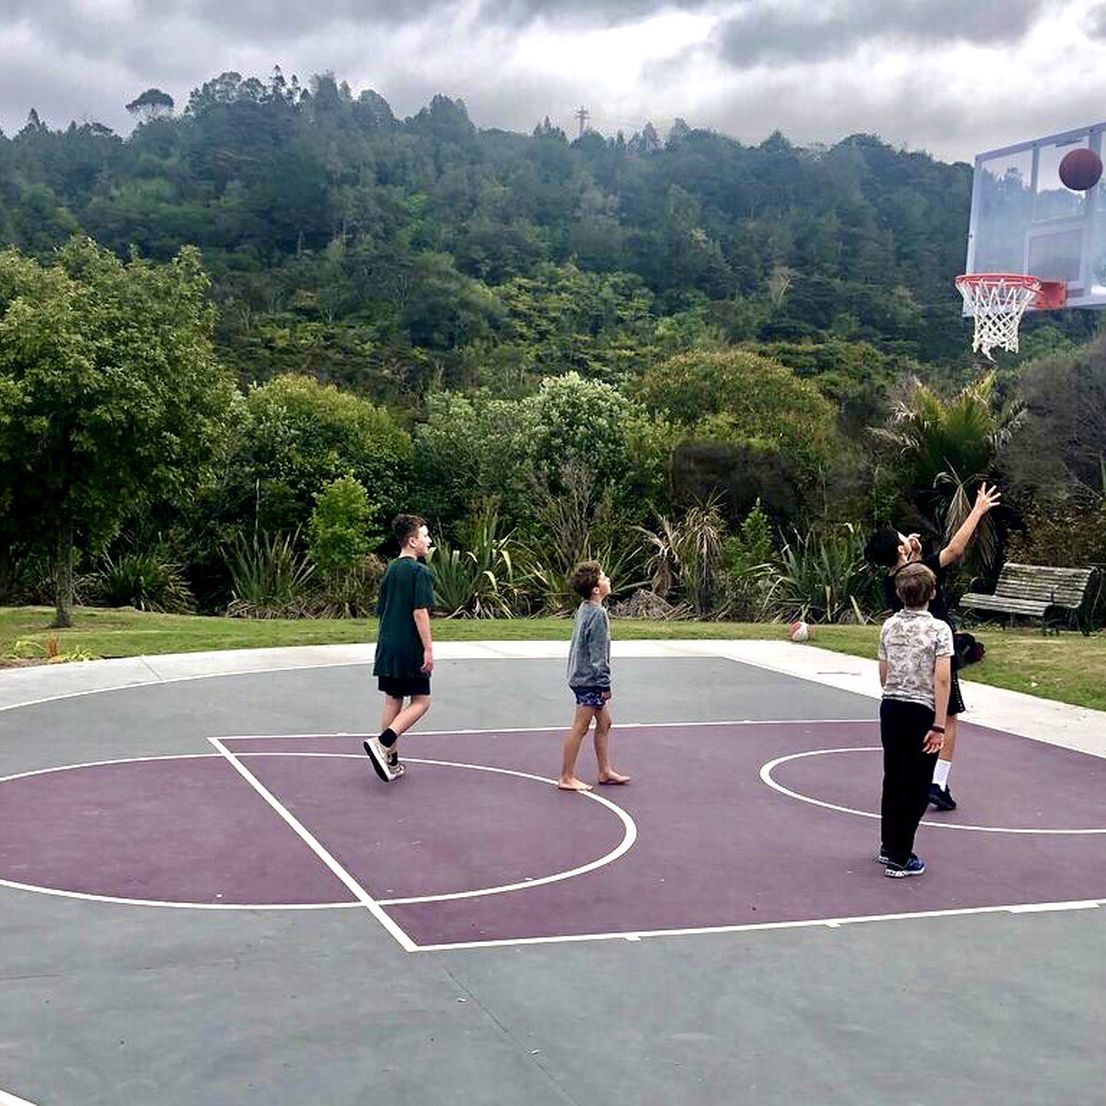 Basketball D Court - Manuka Reserve